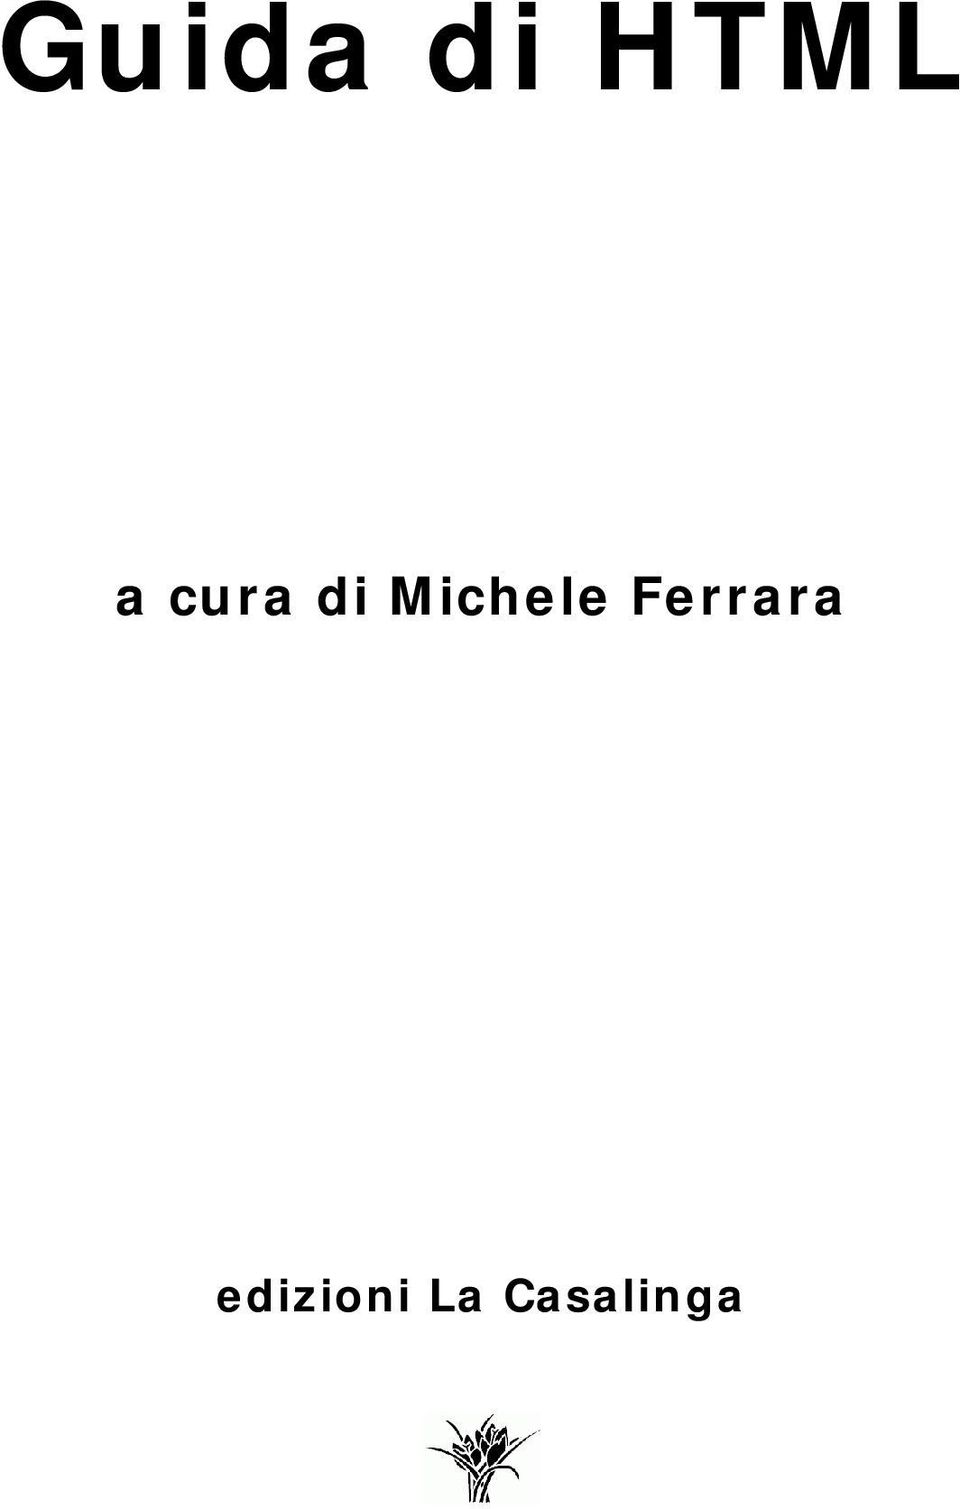 Michele Ferrara